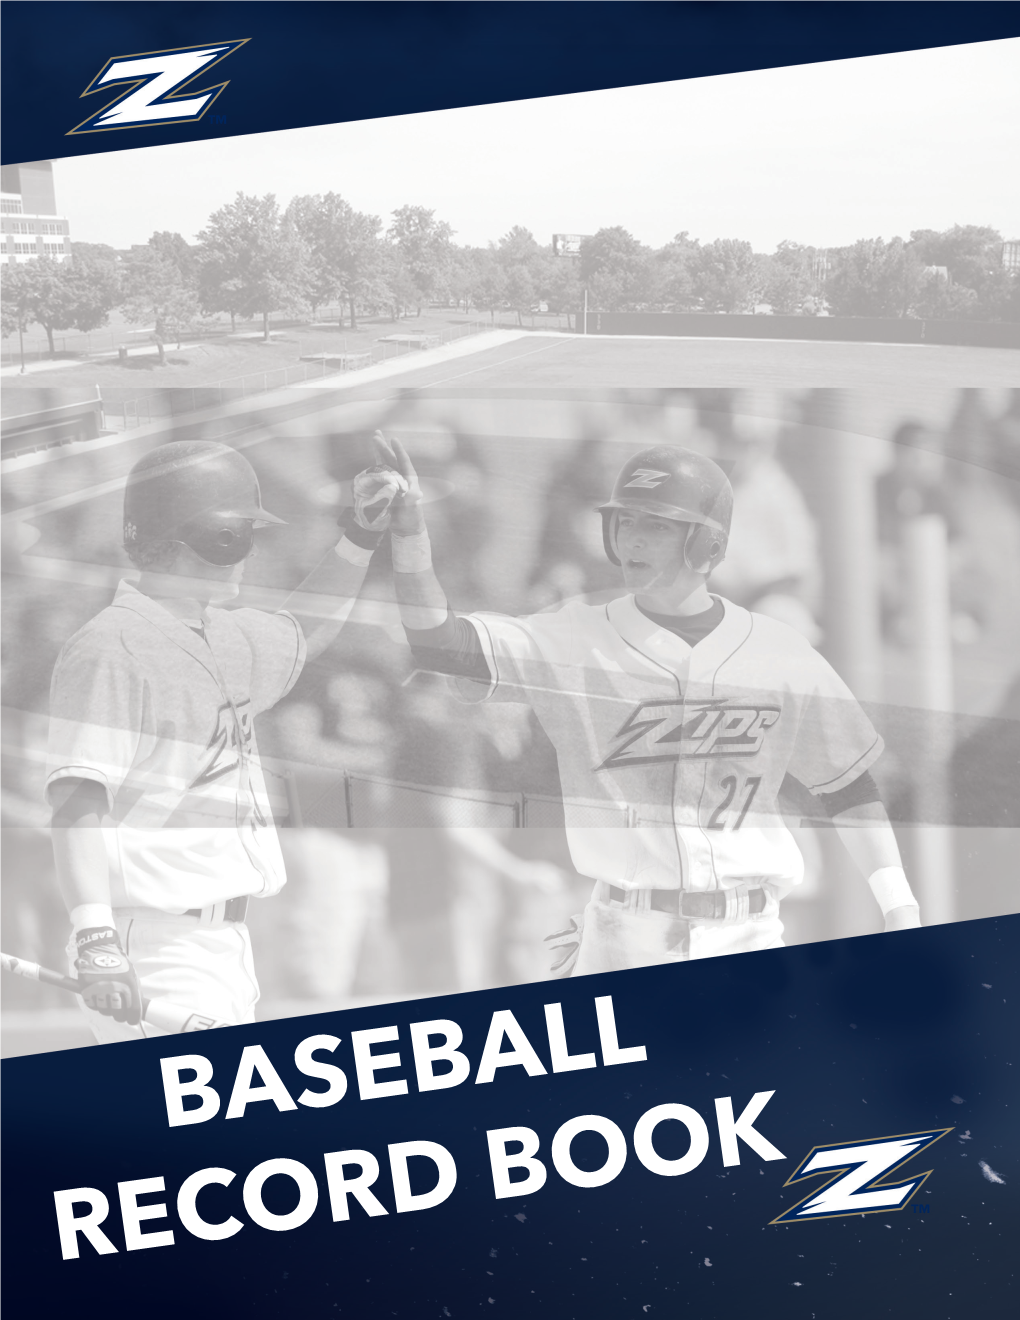 Baseball Record Book Quick Facts